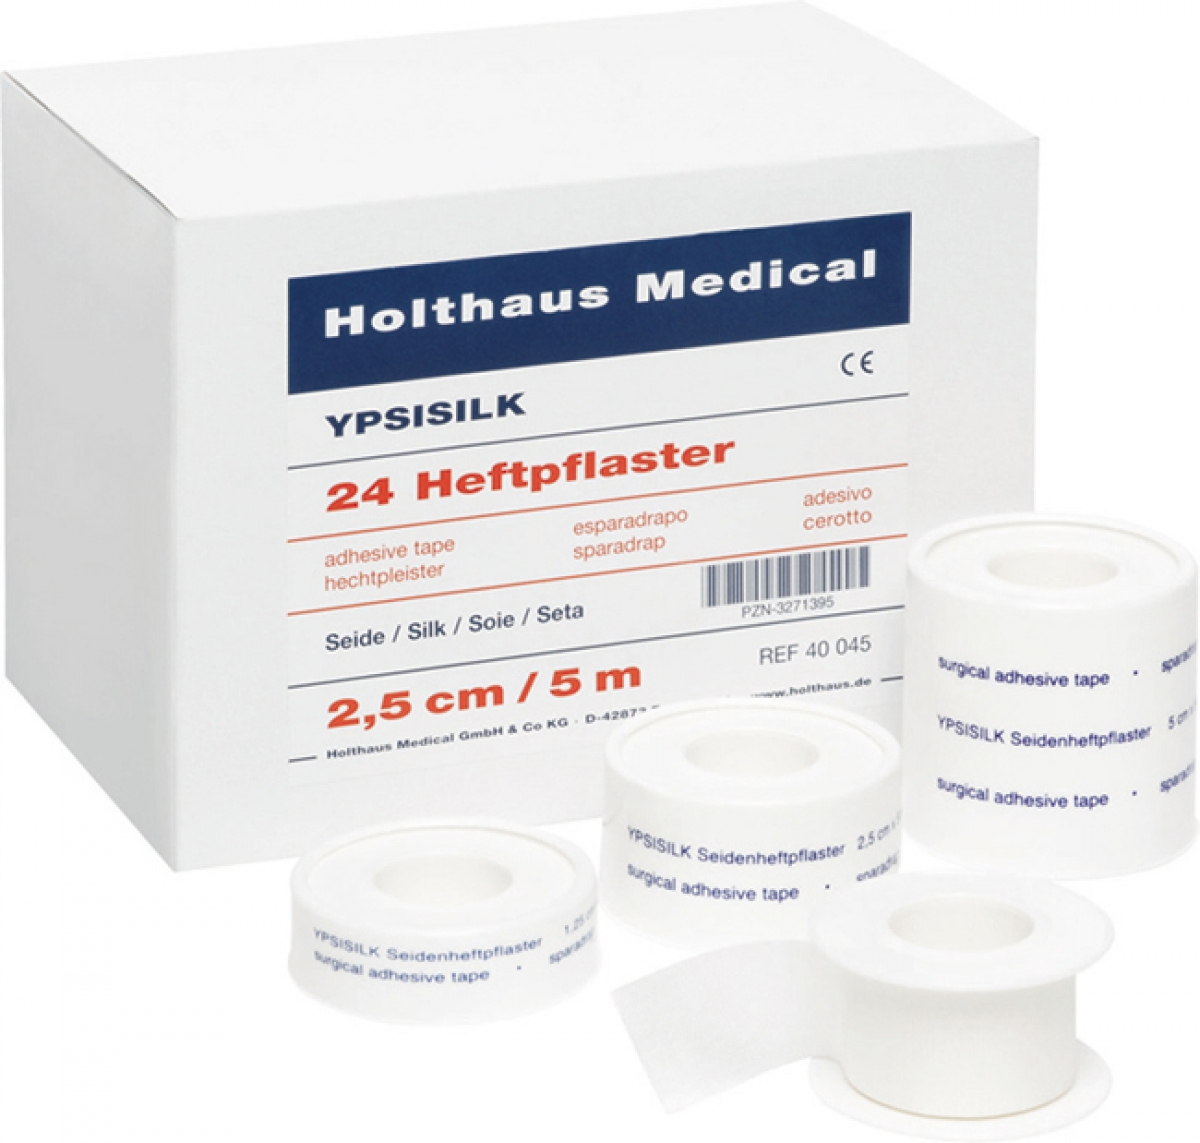 Holthaus Medical, Erste-Hilfe, YPSISILK Heftpflaster , 1,25cmx9,14m